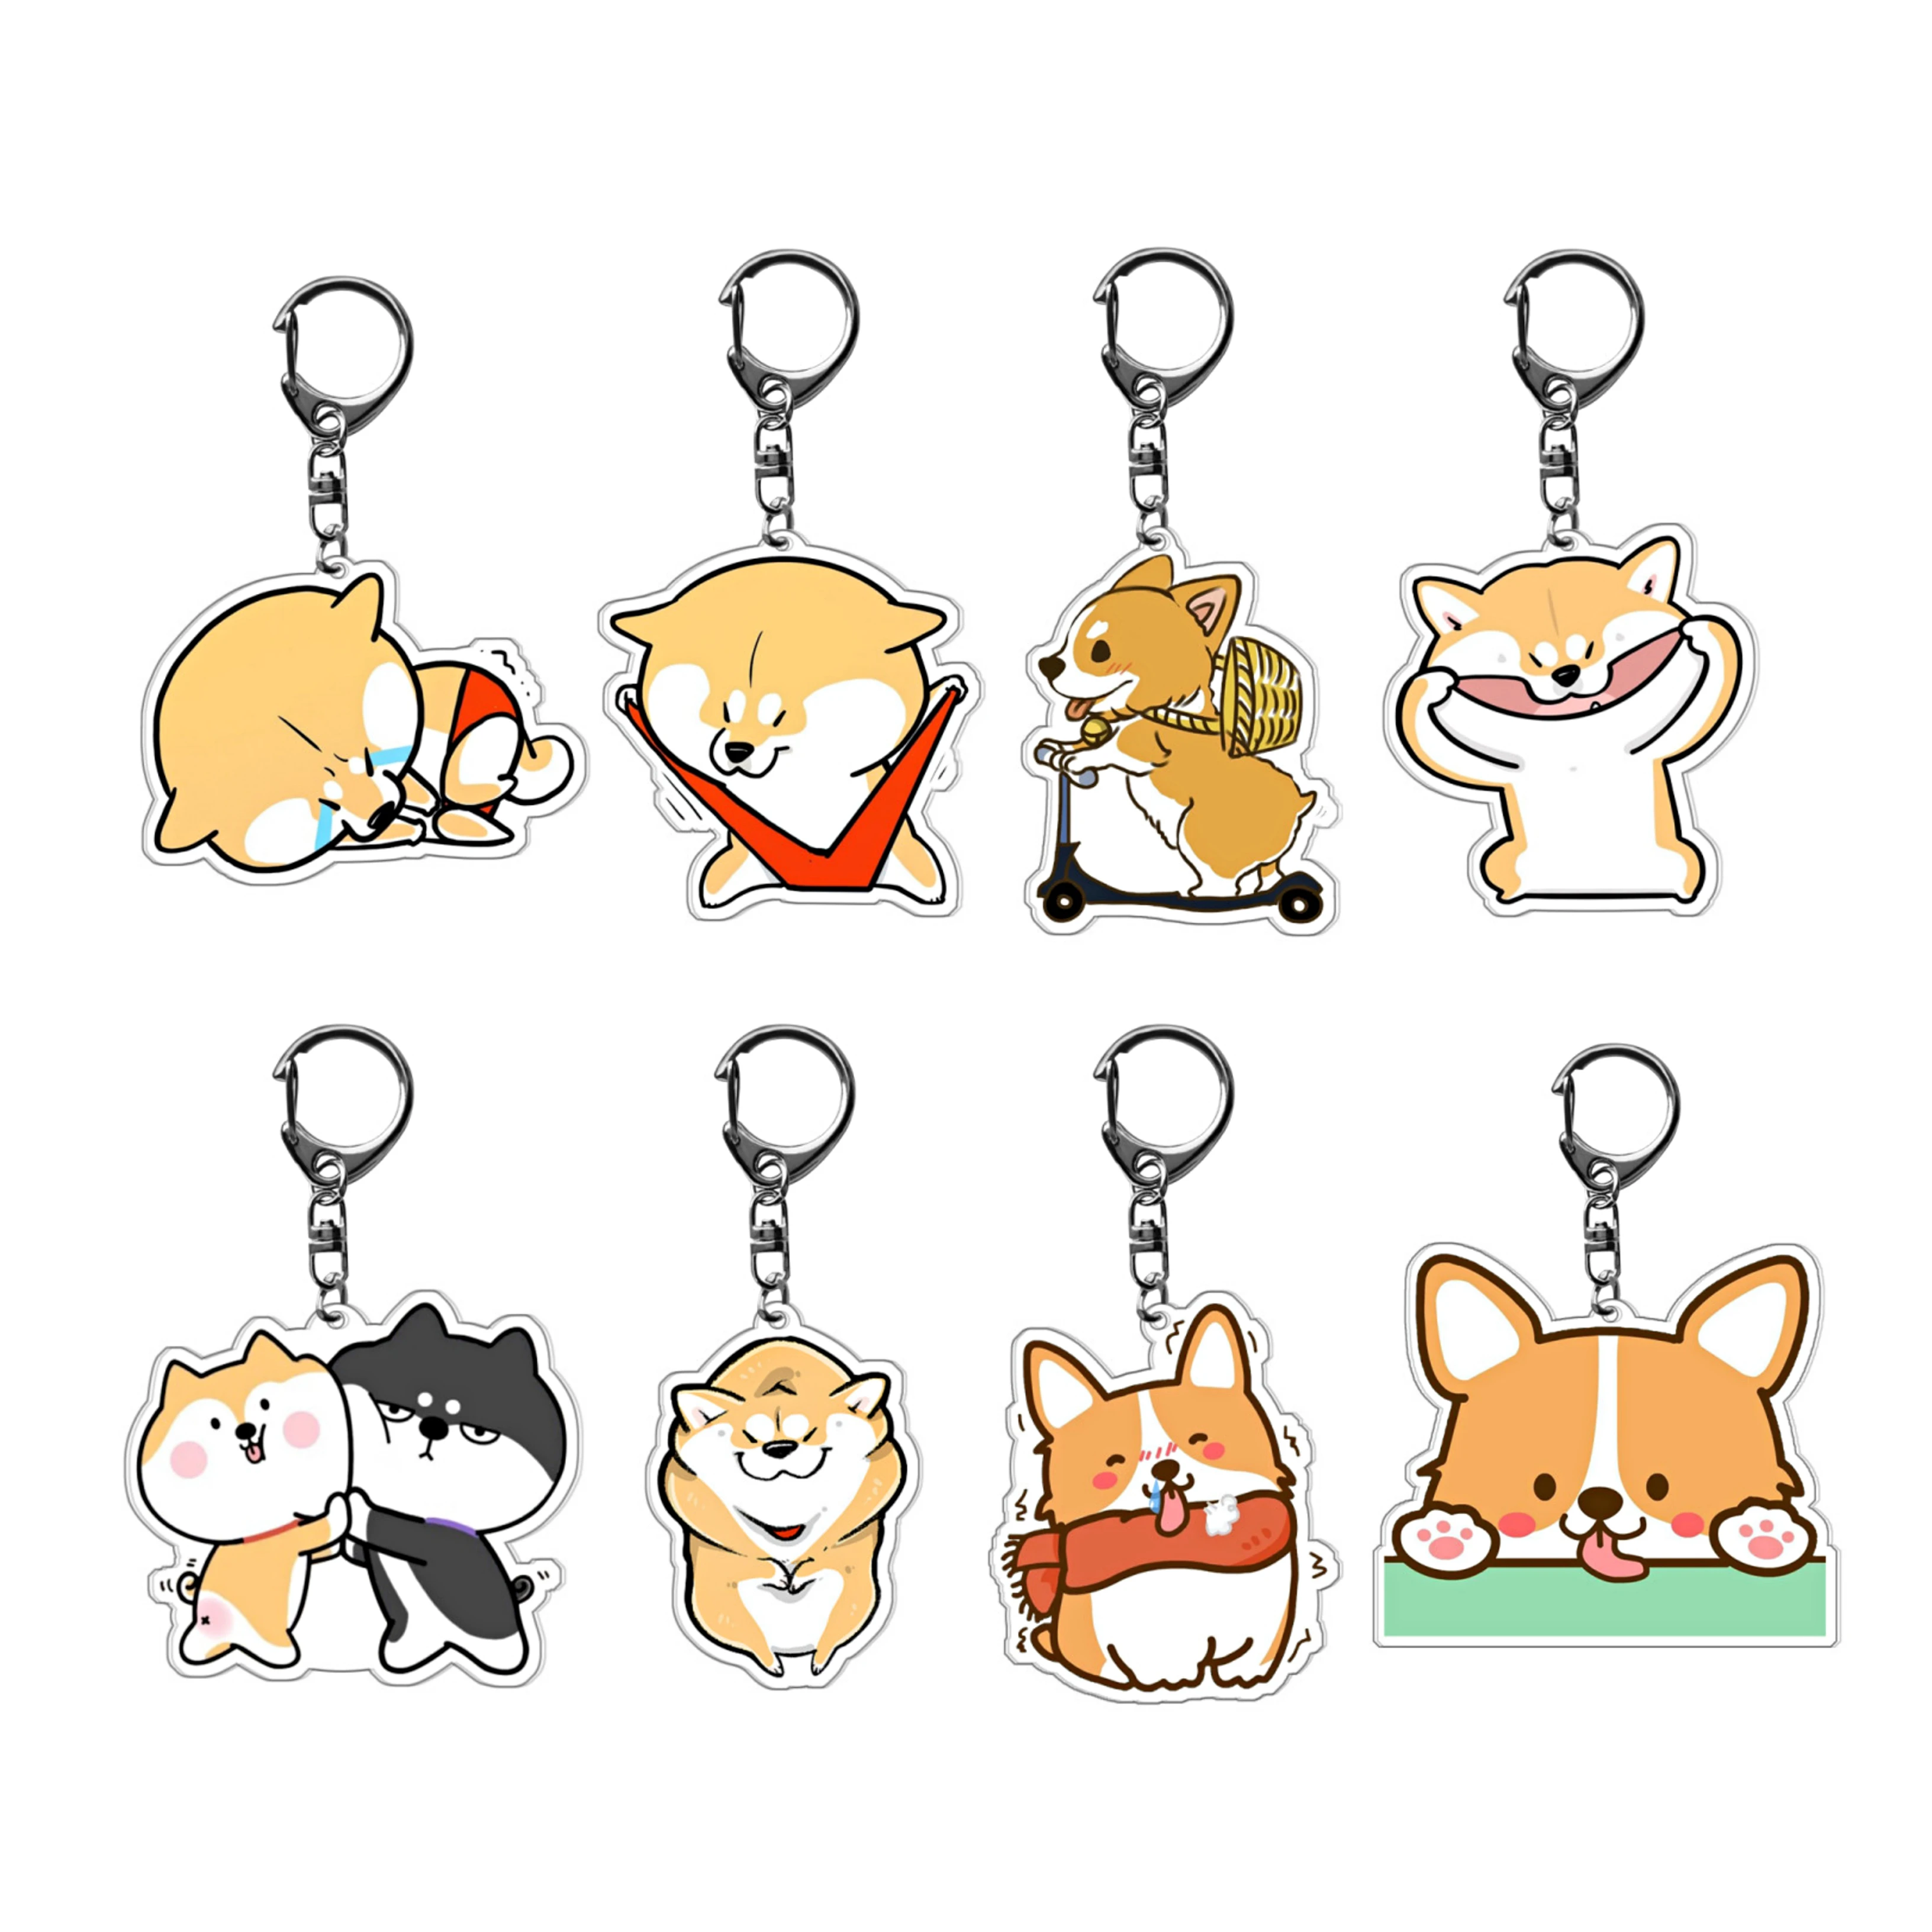 Japanese Dog Shiba Inu Keychain Car Key Chain Pet Welsh Corgi Dogs Cartoon Print Acrylic Figure Key Ring Holder Gift for Friends